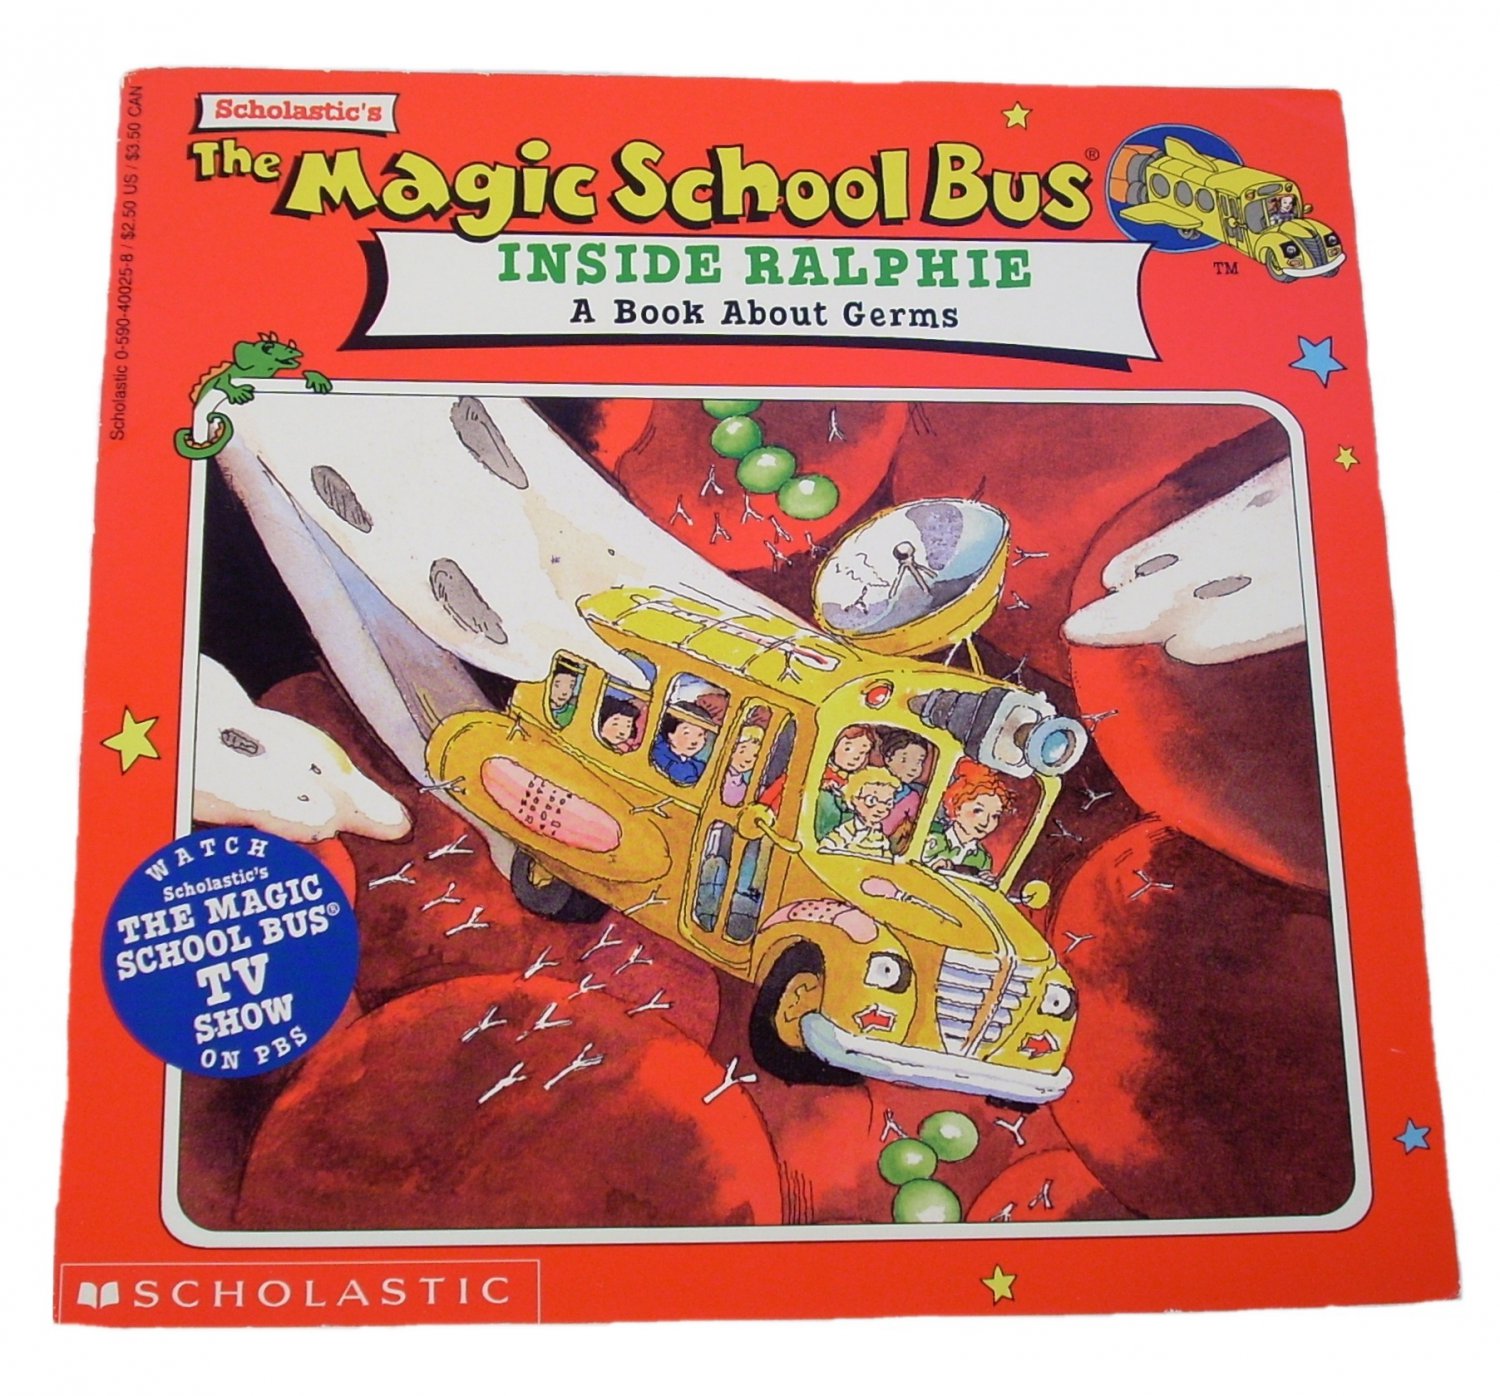 The Magic School Bus Inside Ralphie by Joanna Cole